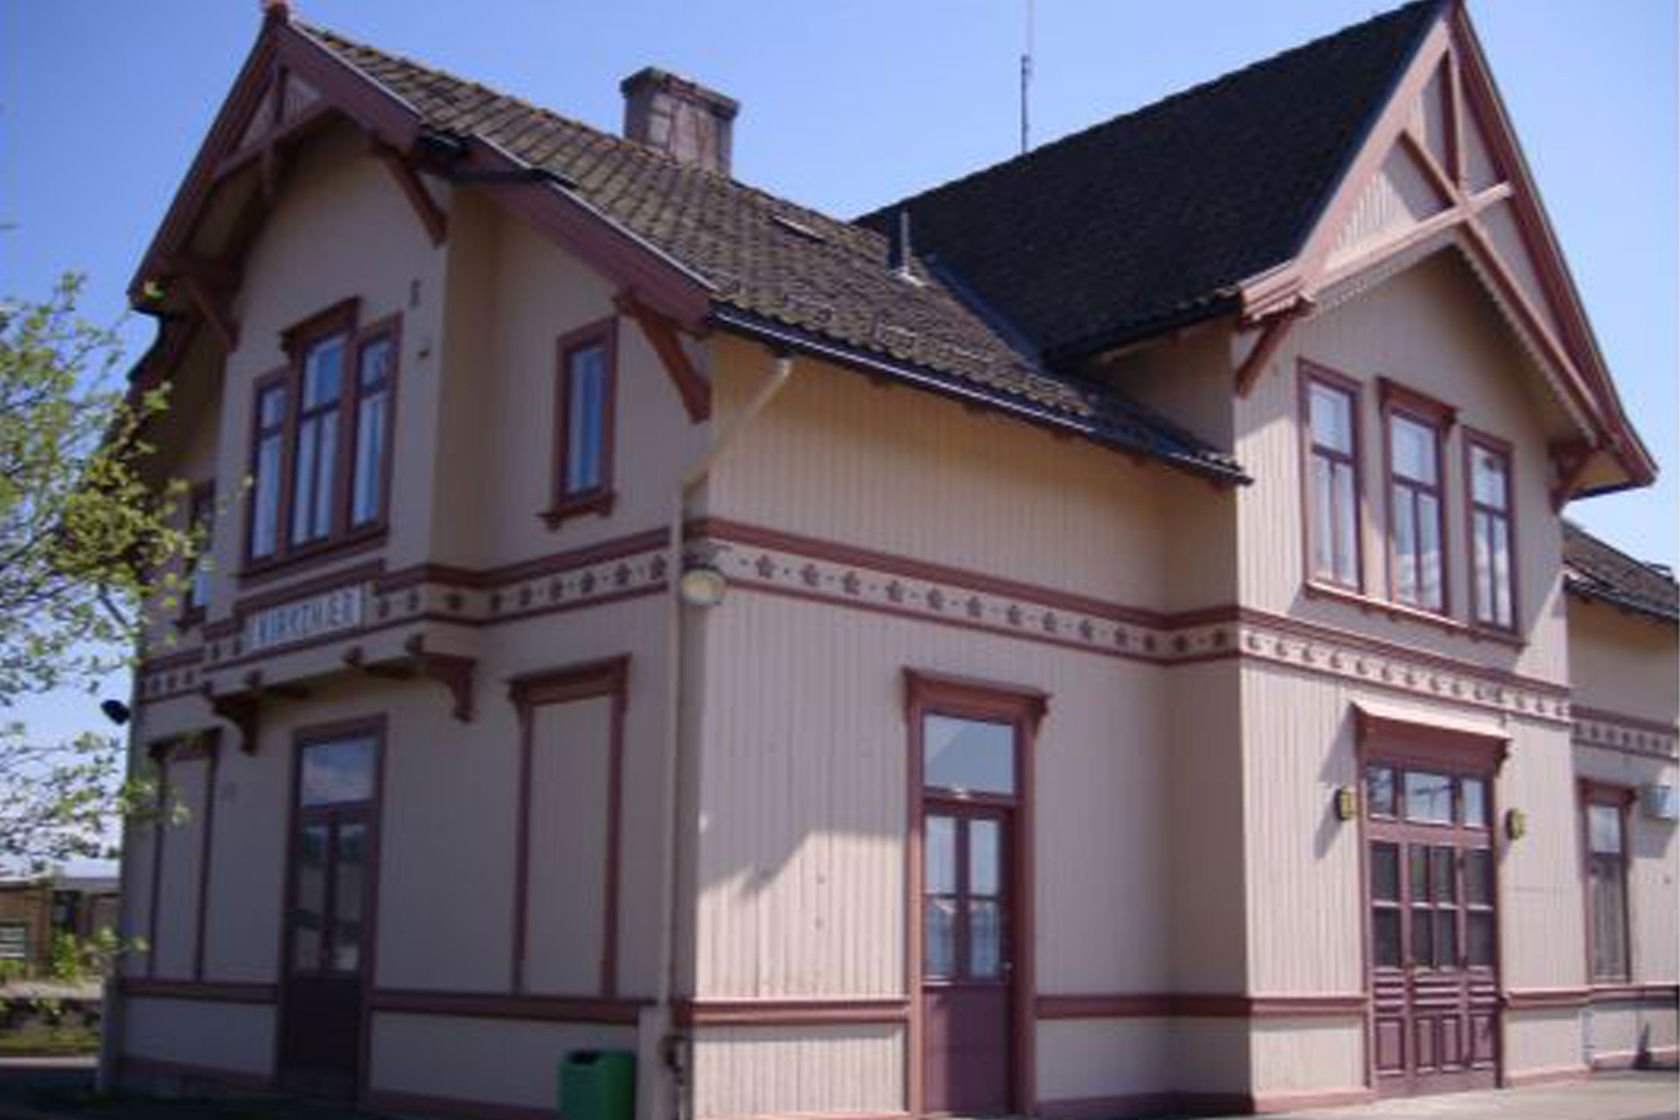 The station building at Kirkenær station